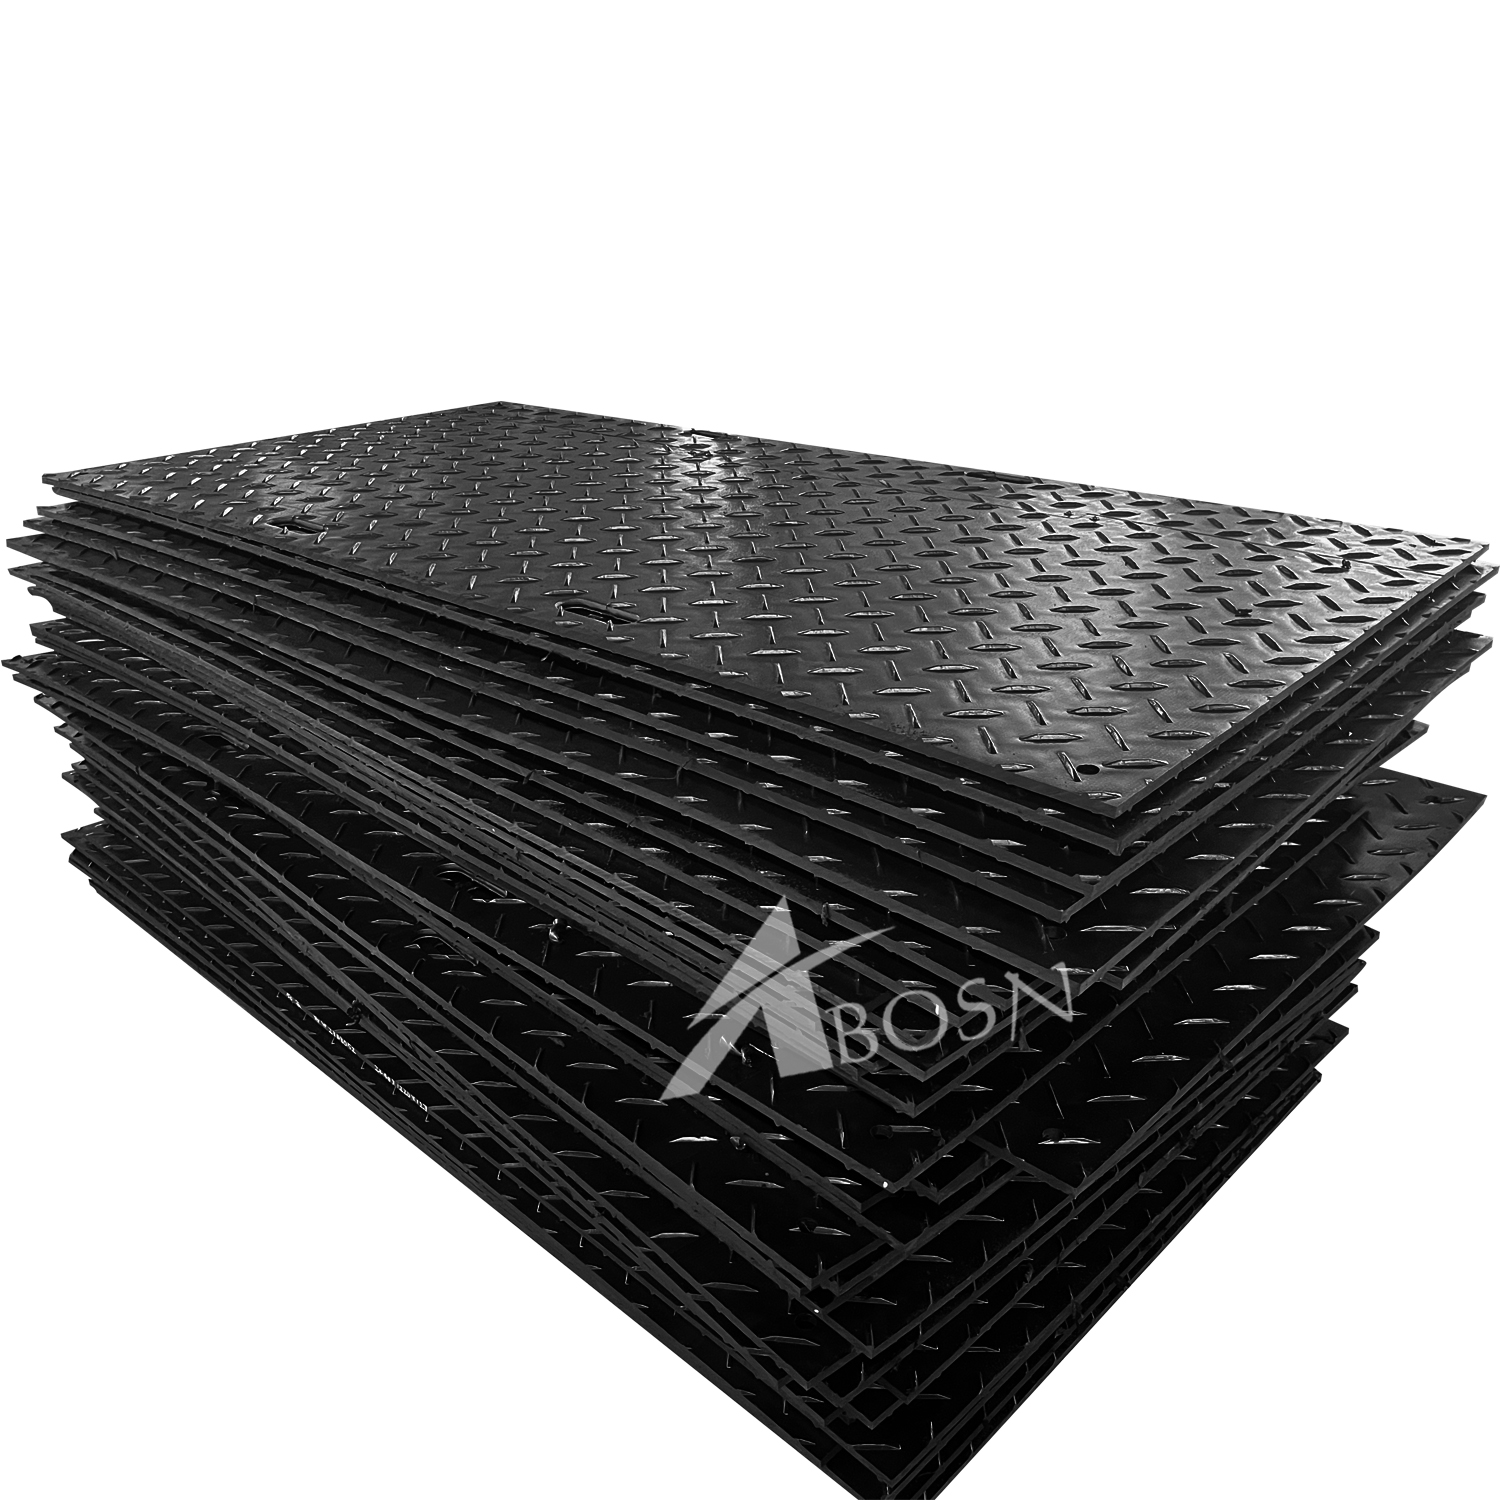 HDPE mat off temporary road mats ground protection mats